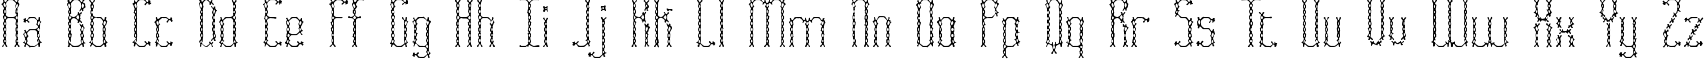 Пример написания английского алфавита шрифтом Fascii Cross BRK